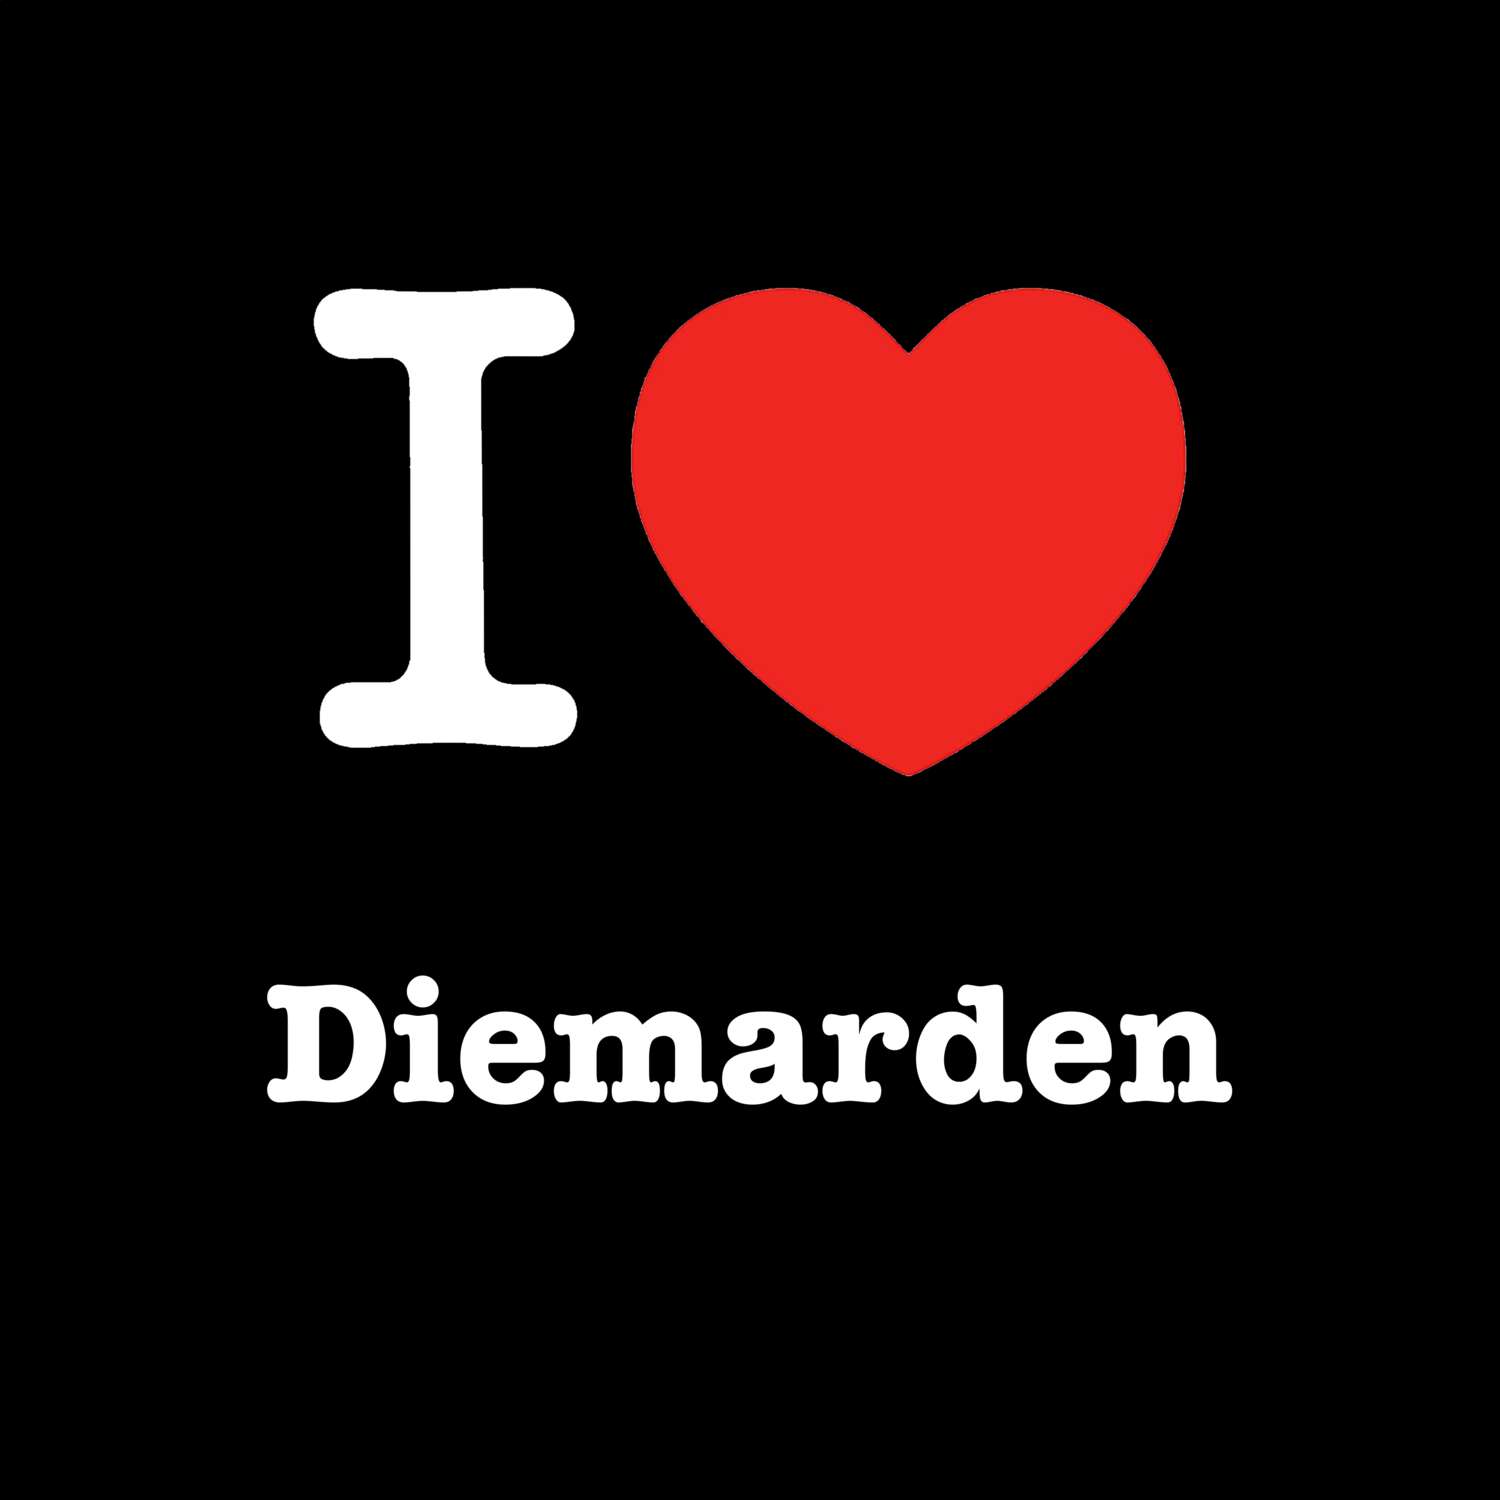 Diemarden T-Shirt »I love«